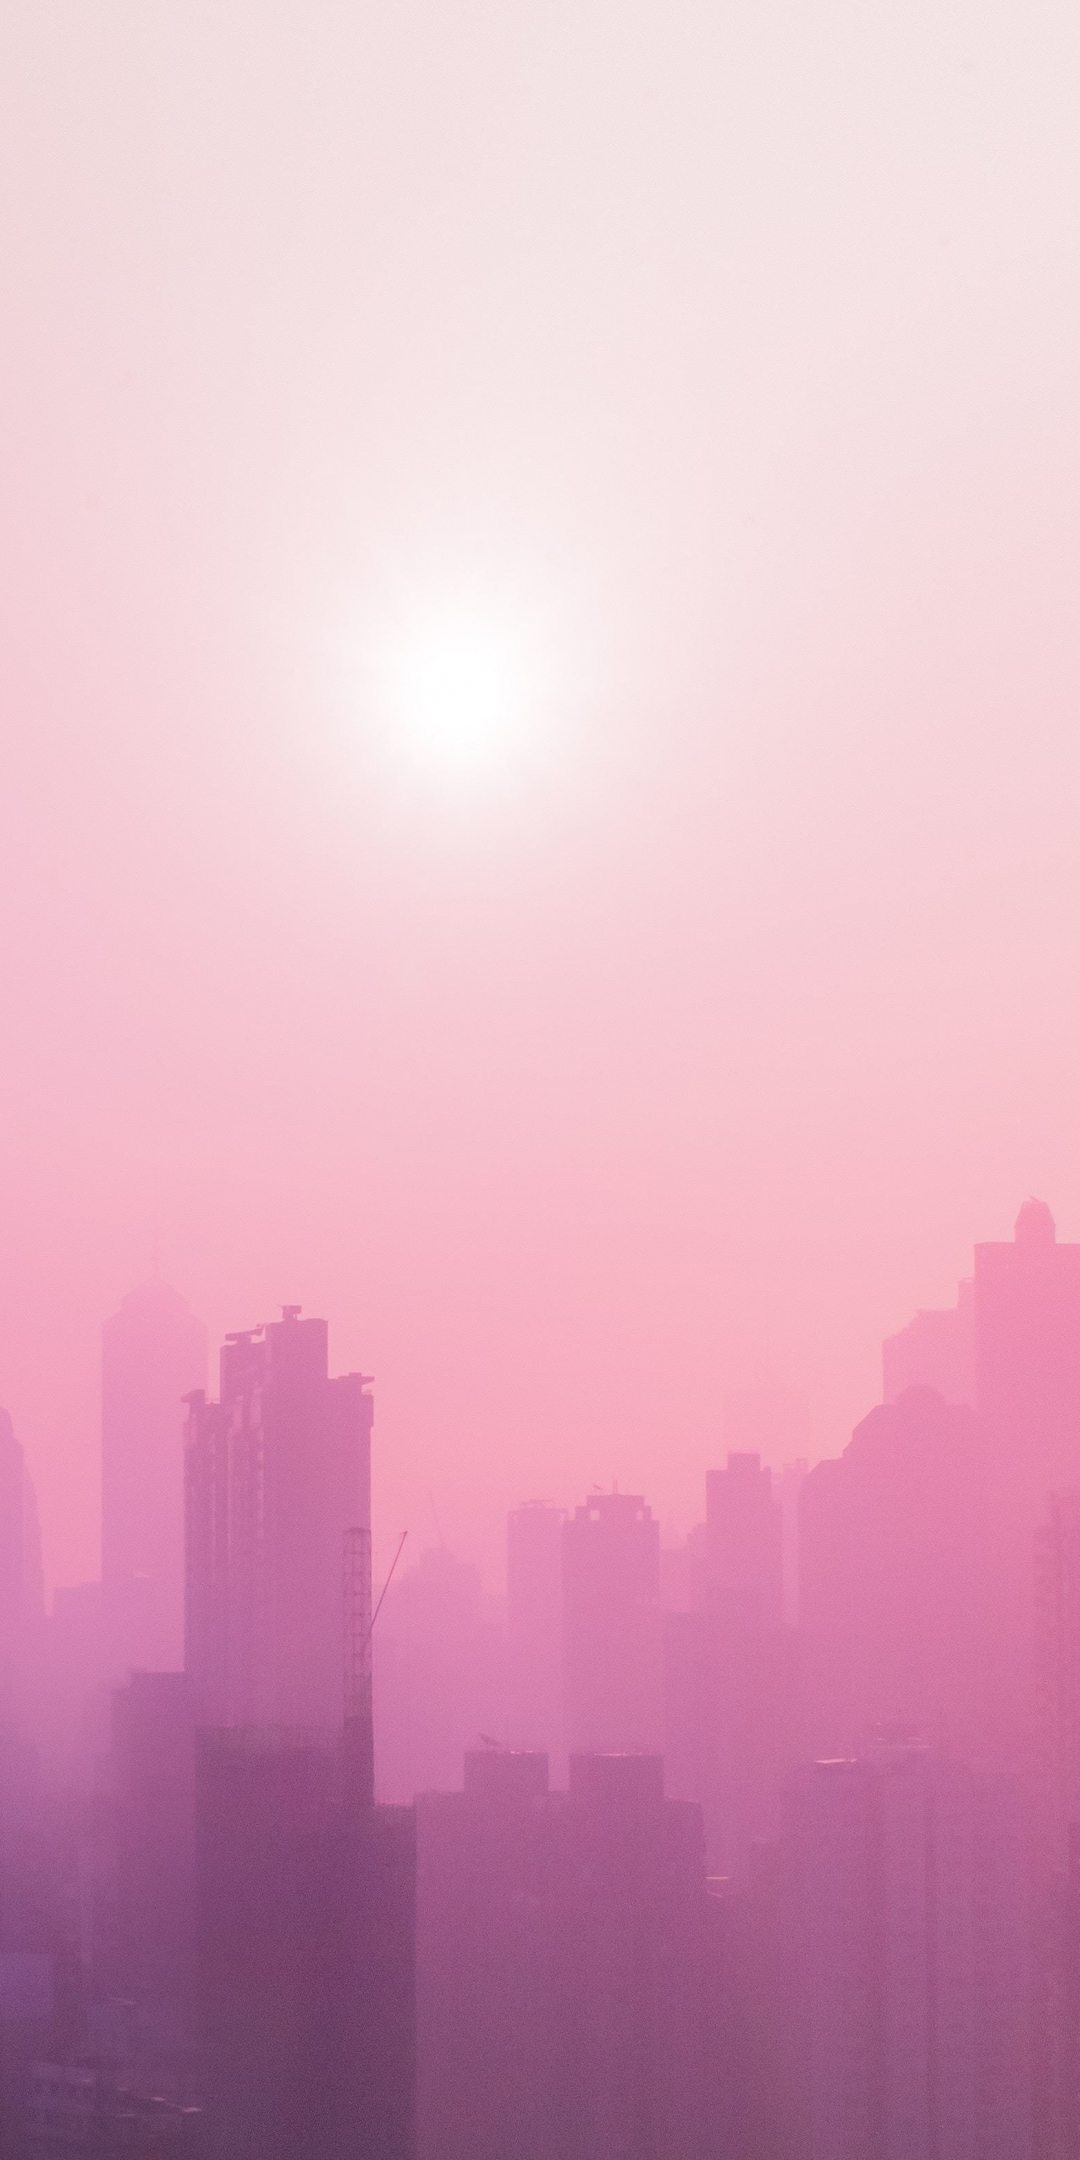 Urban, skyscrapers, buildings, sunny day, pink smog, 1080x2160 wallpaper